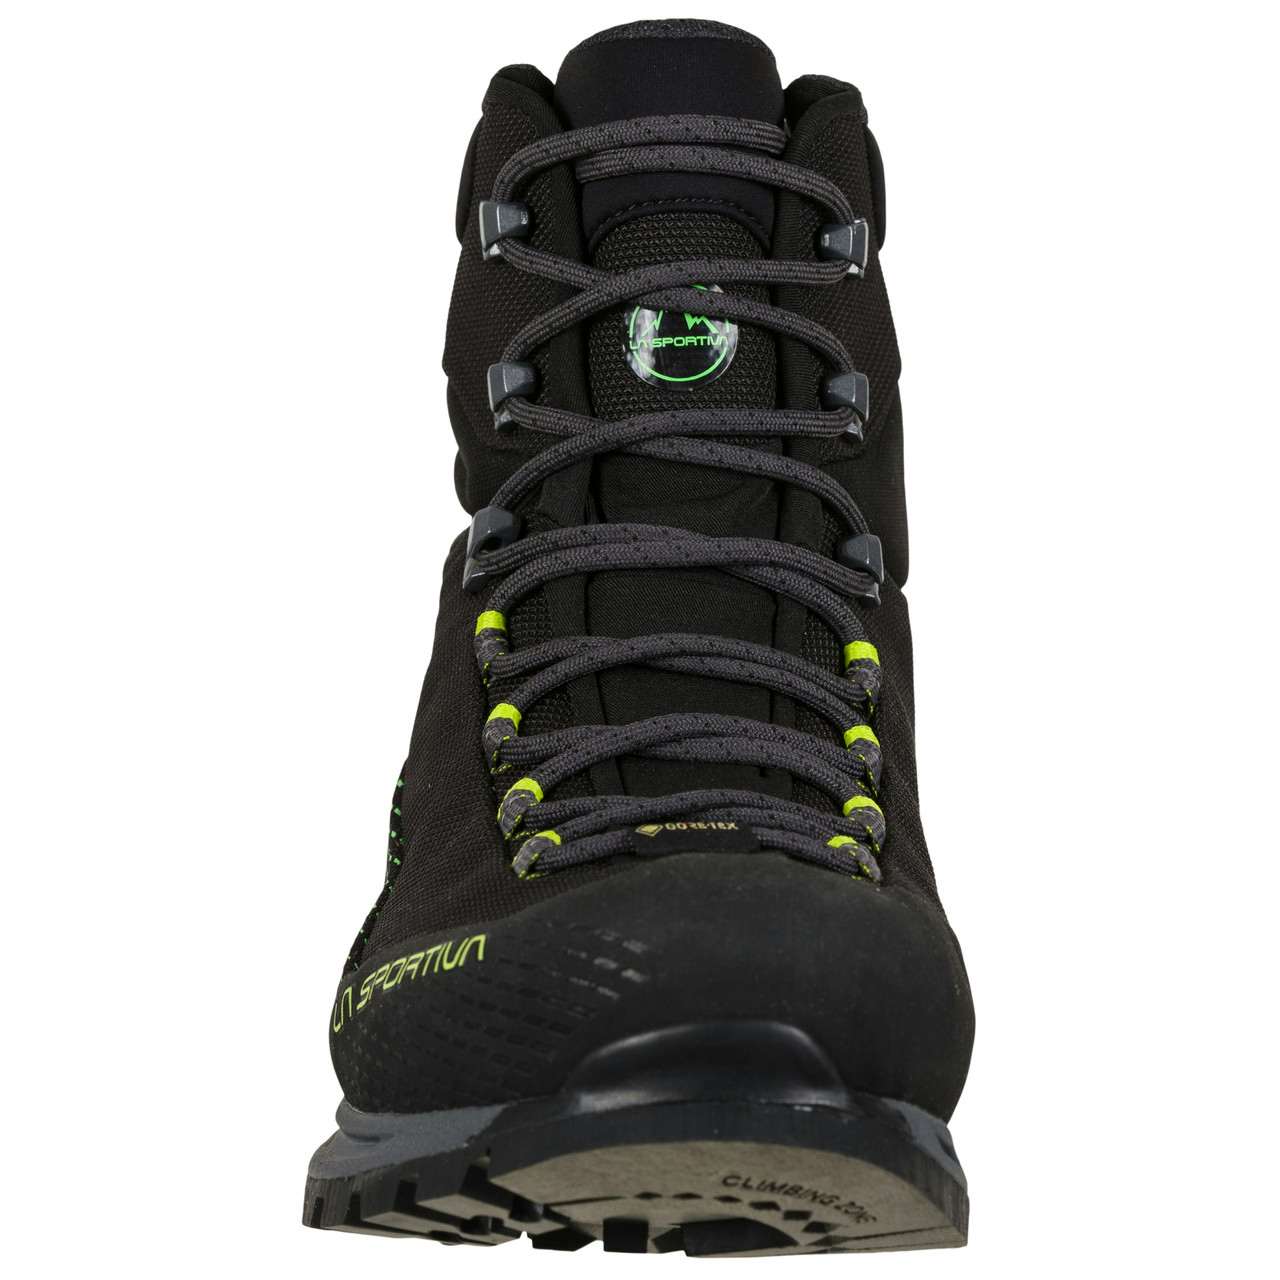 Chaussures de courte randonnée Trango TRK GTX Noir/Vert vif